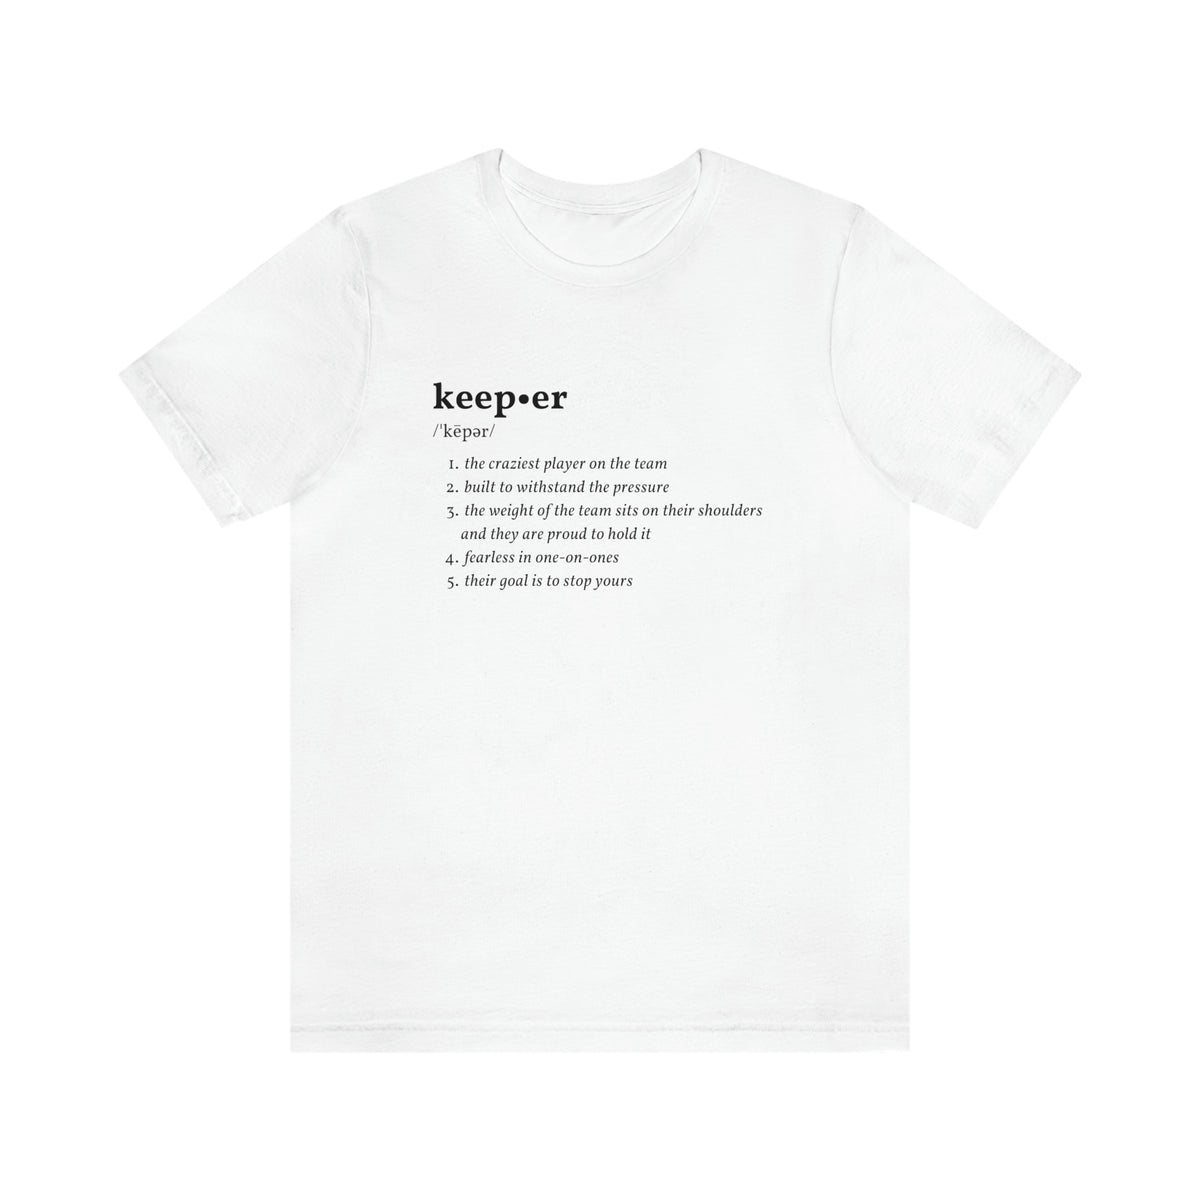 Keeper Definition Adult T-Shirt